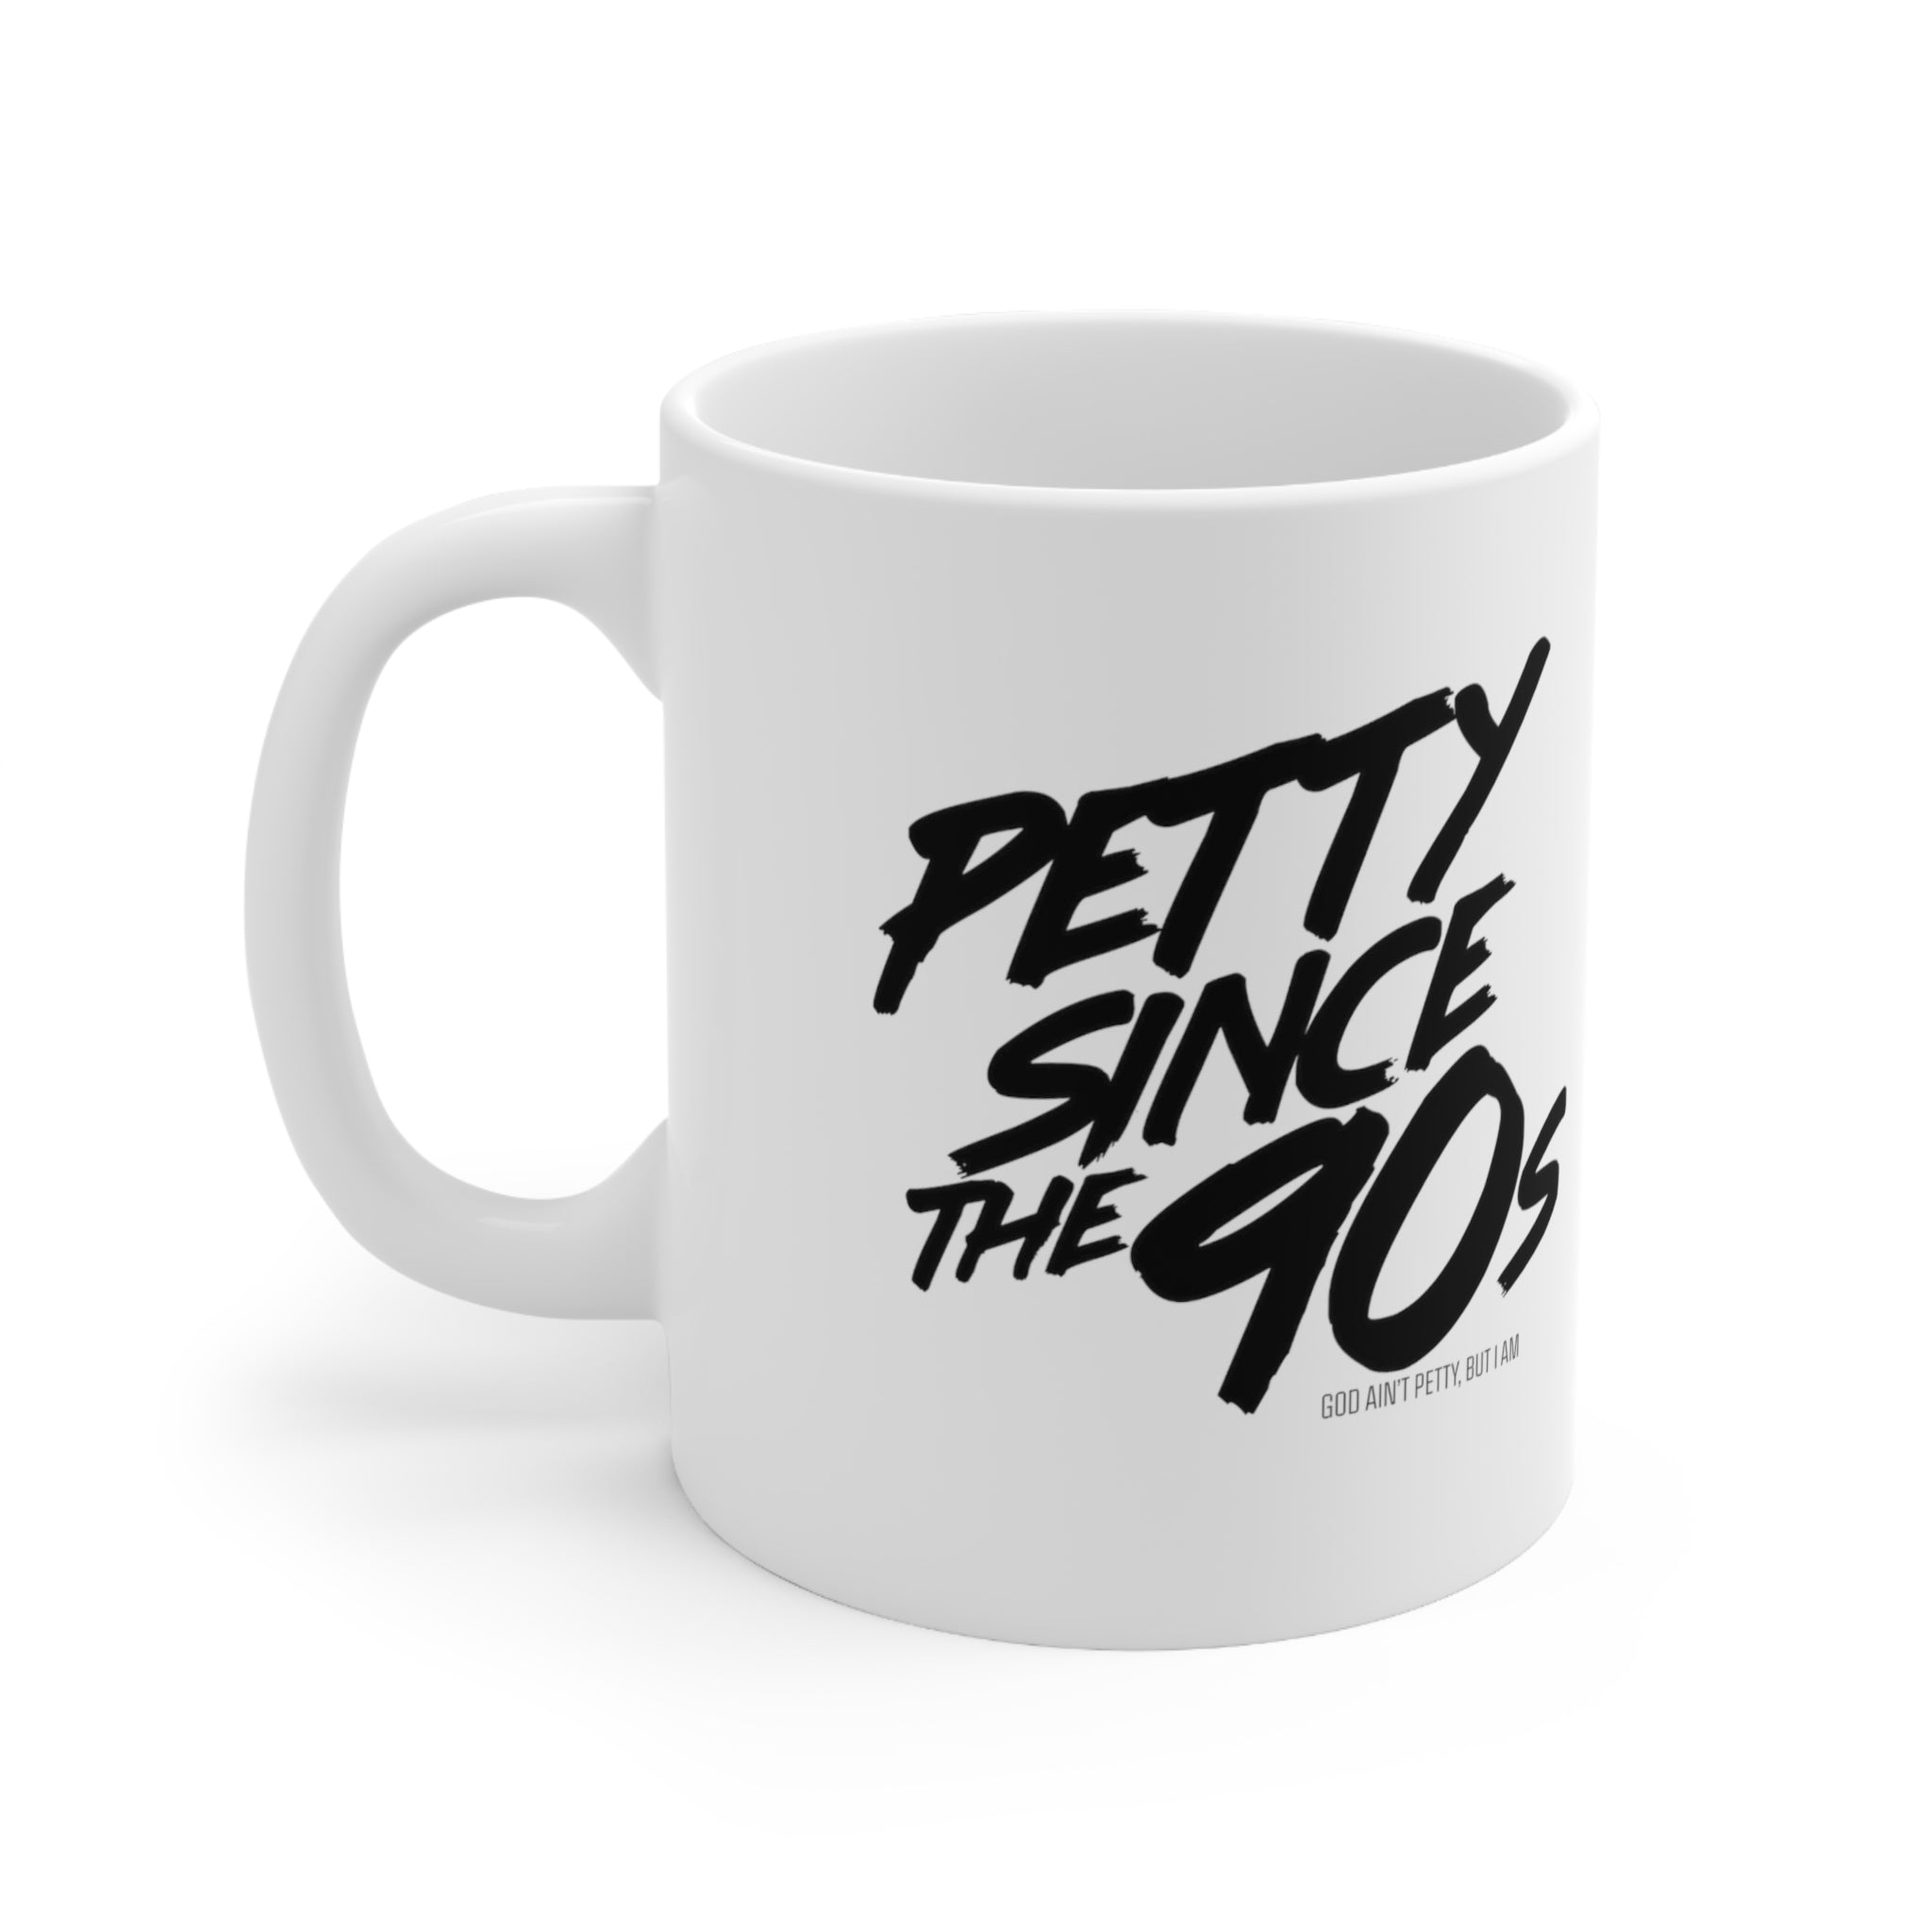 Petty Since the 90s Mug 11oz (White & Black )-Mug-The Original God Ain't Petty But I Am